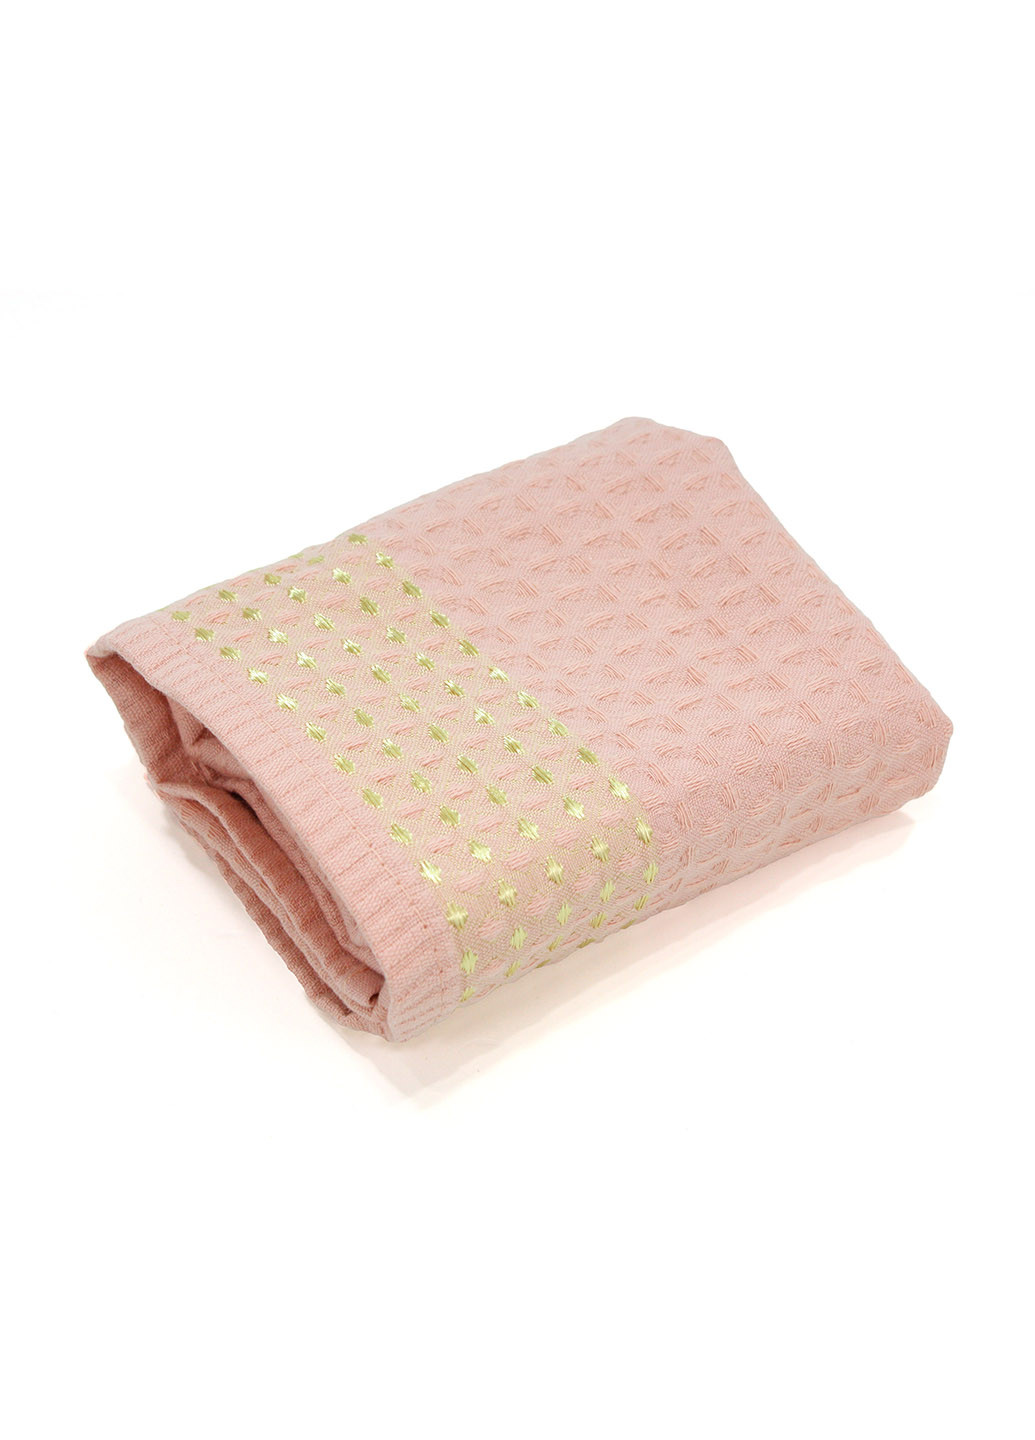 Еней-Плюс кухонное полотенце 40х60см (0325) розовый производство - Украина